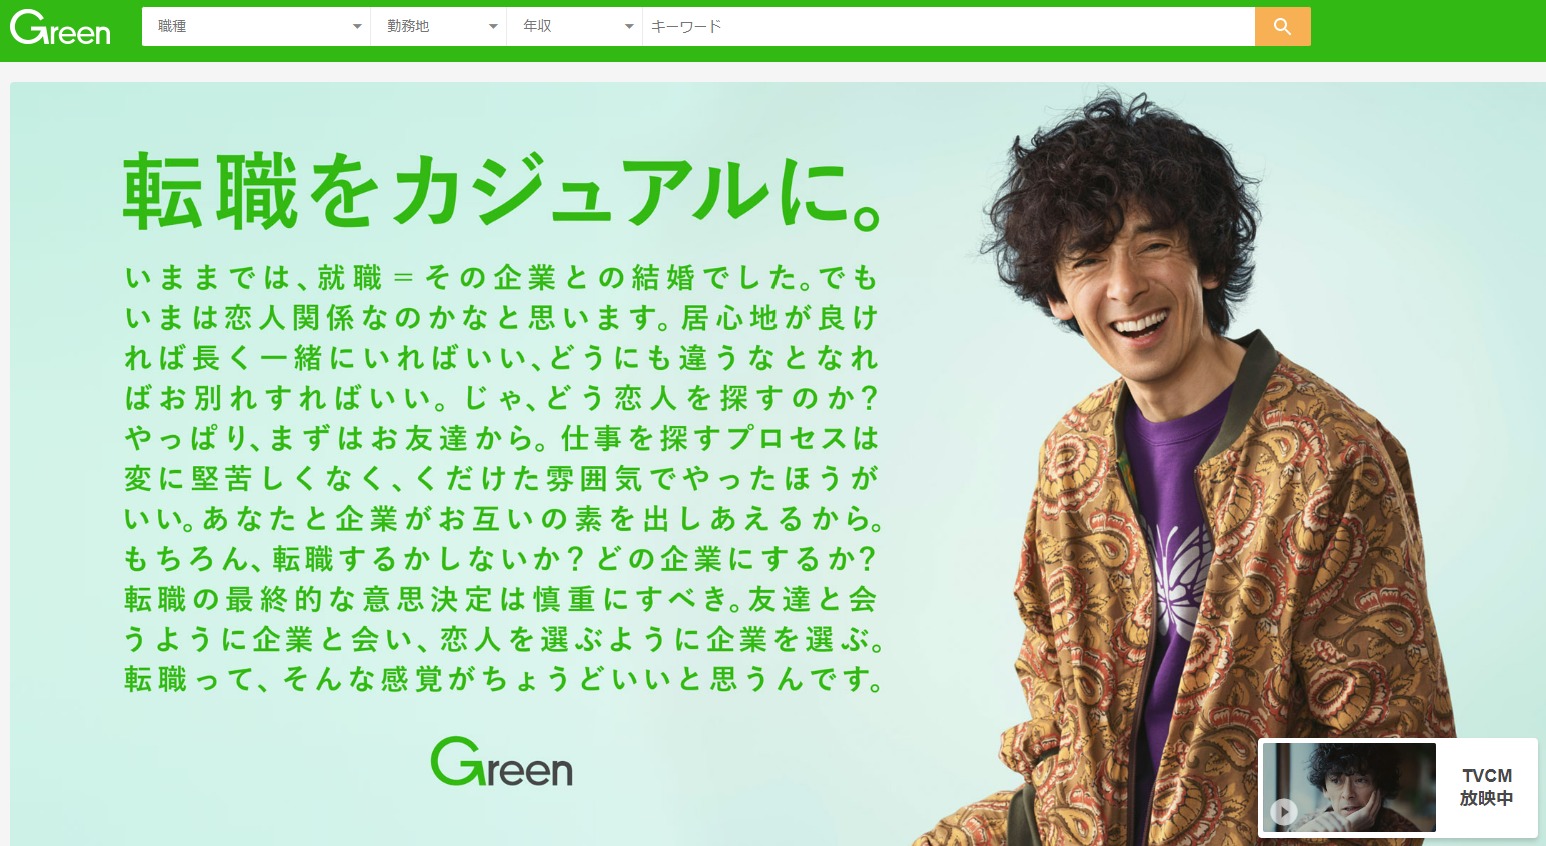 Green
